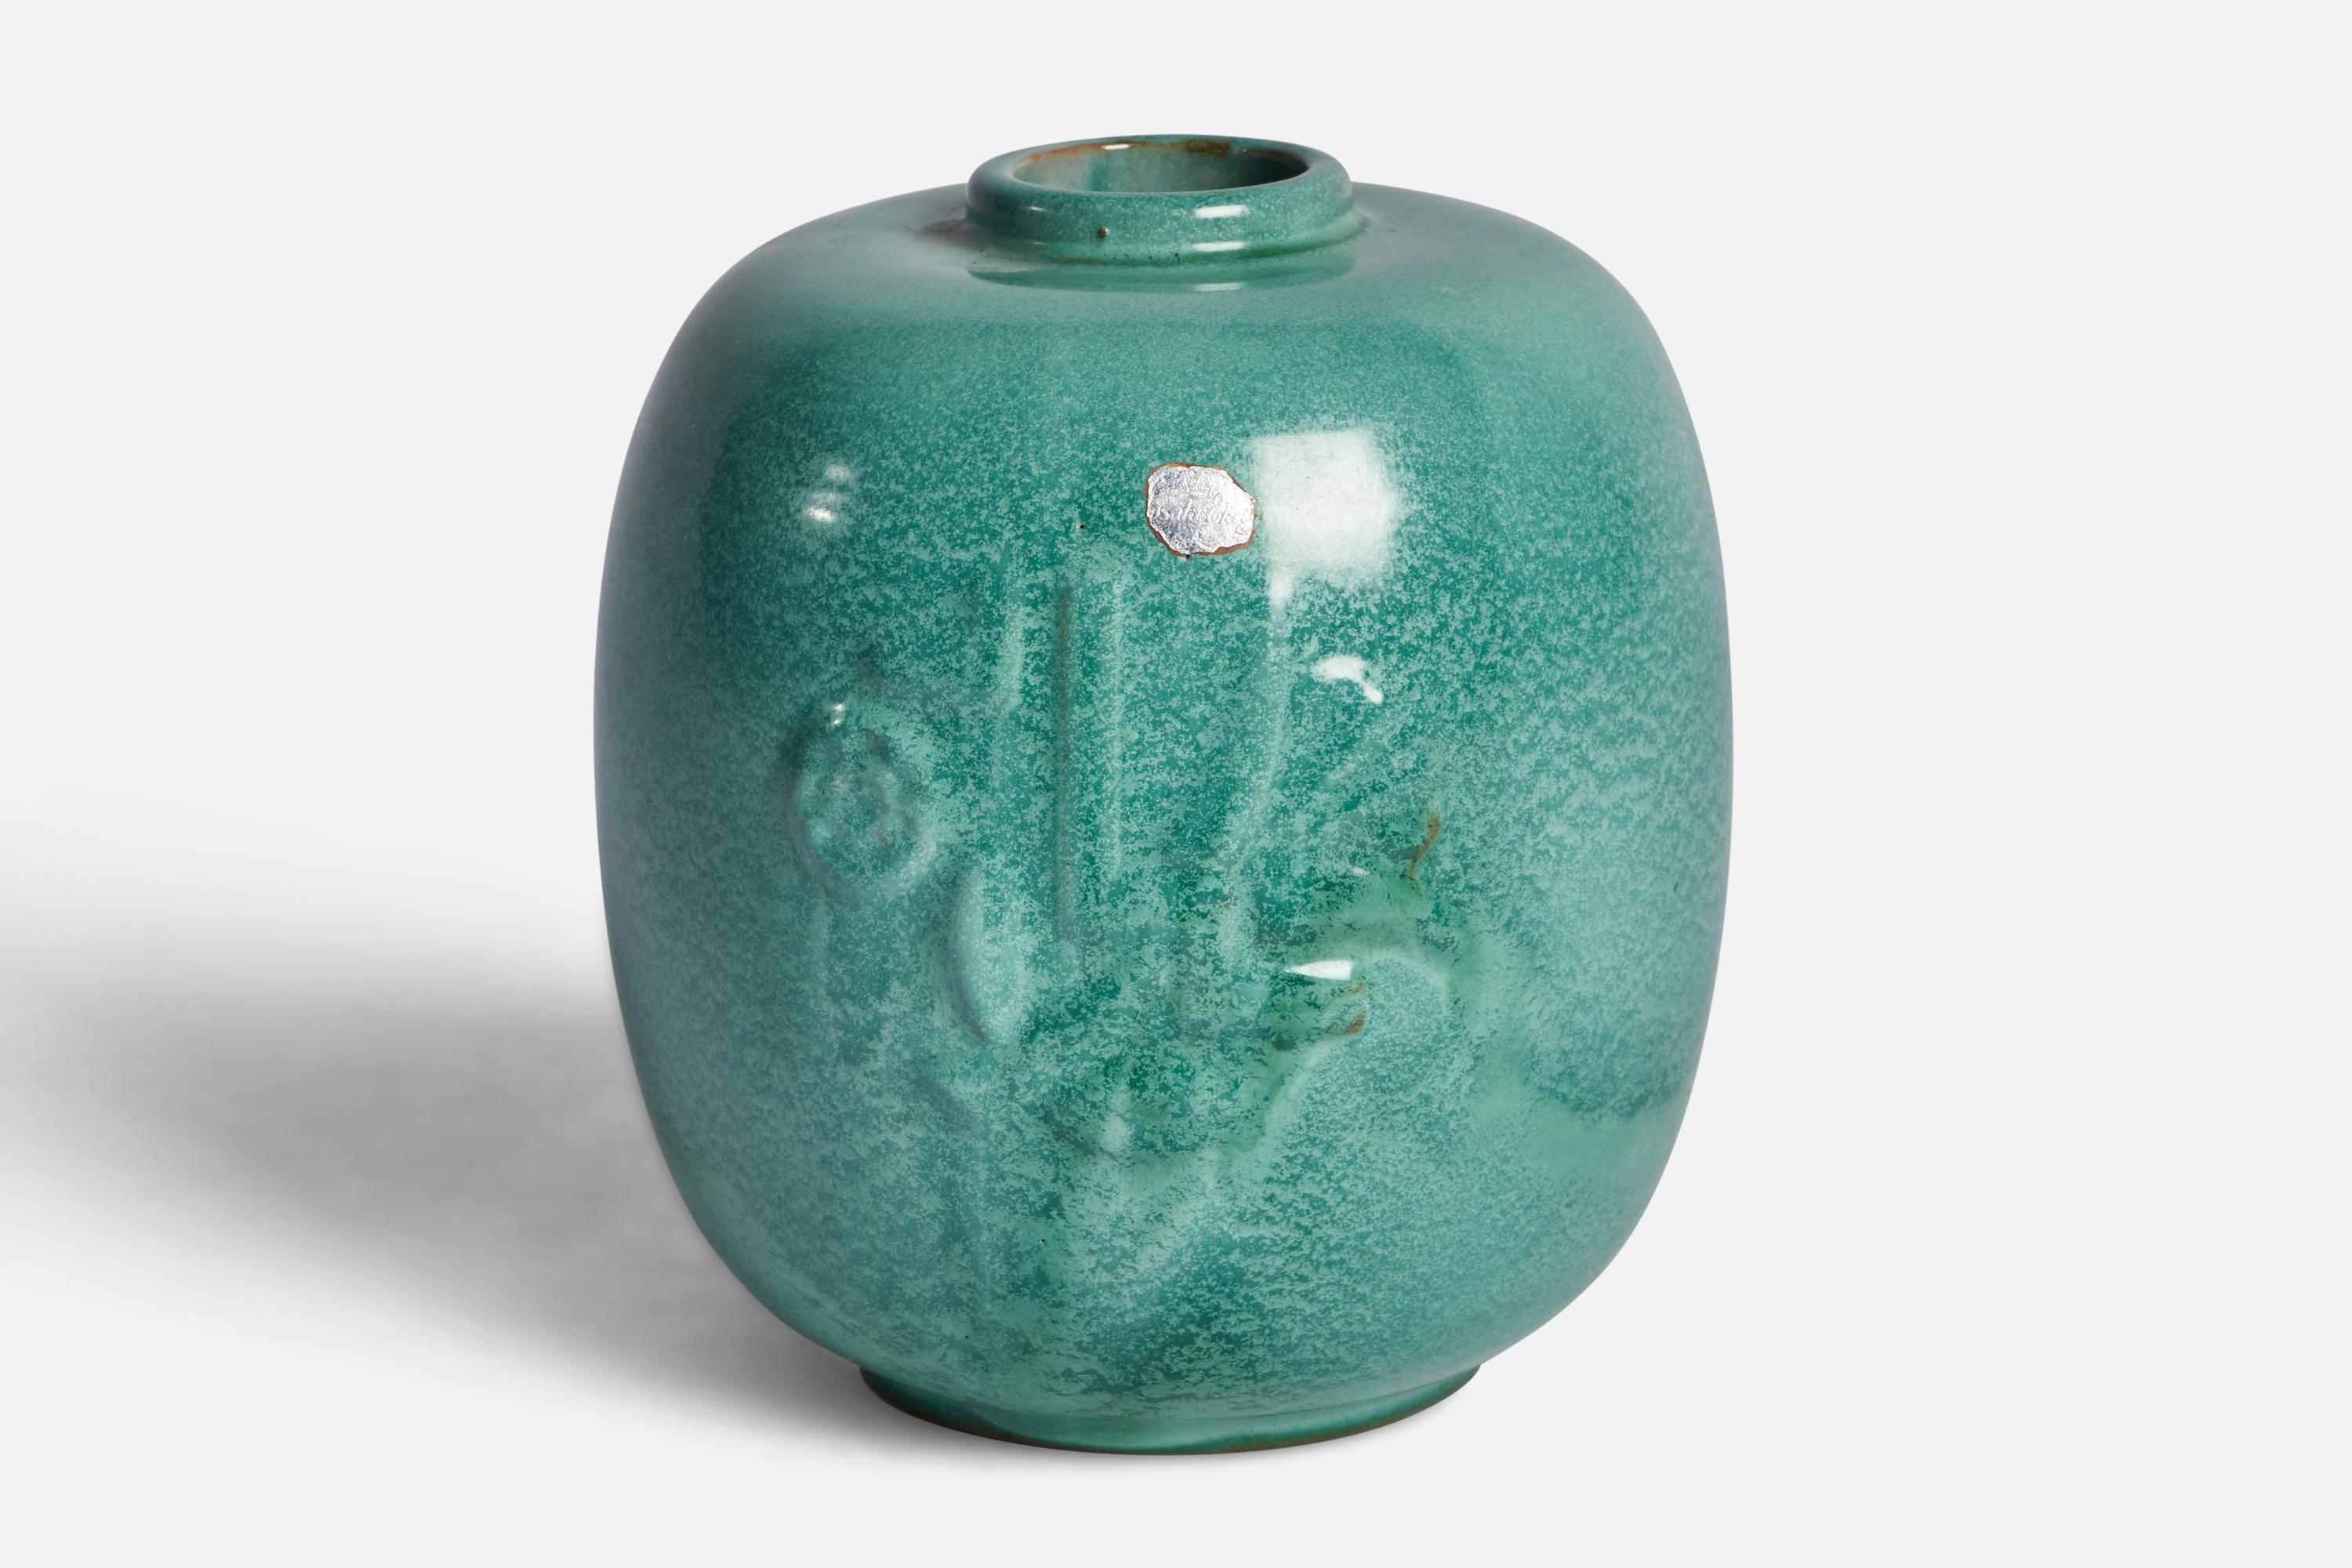 A teal green-glazed earthenware vase designed and produced by Upsala Ekeby, Sweden, 1930s.